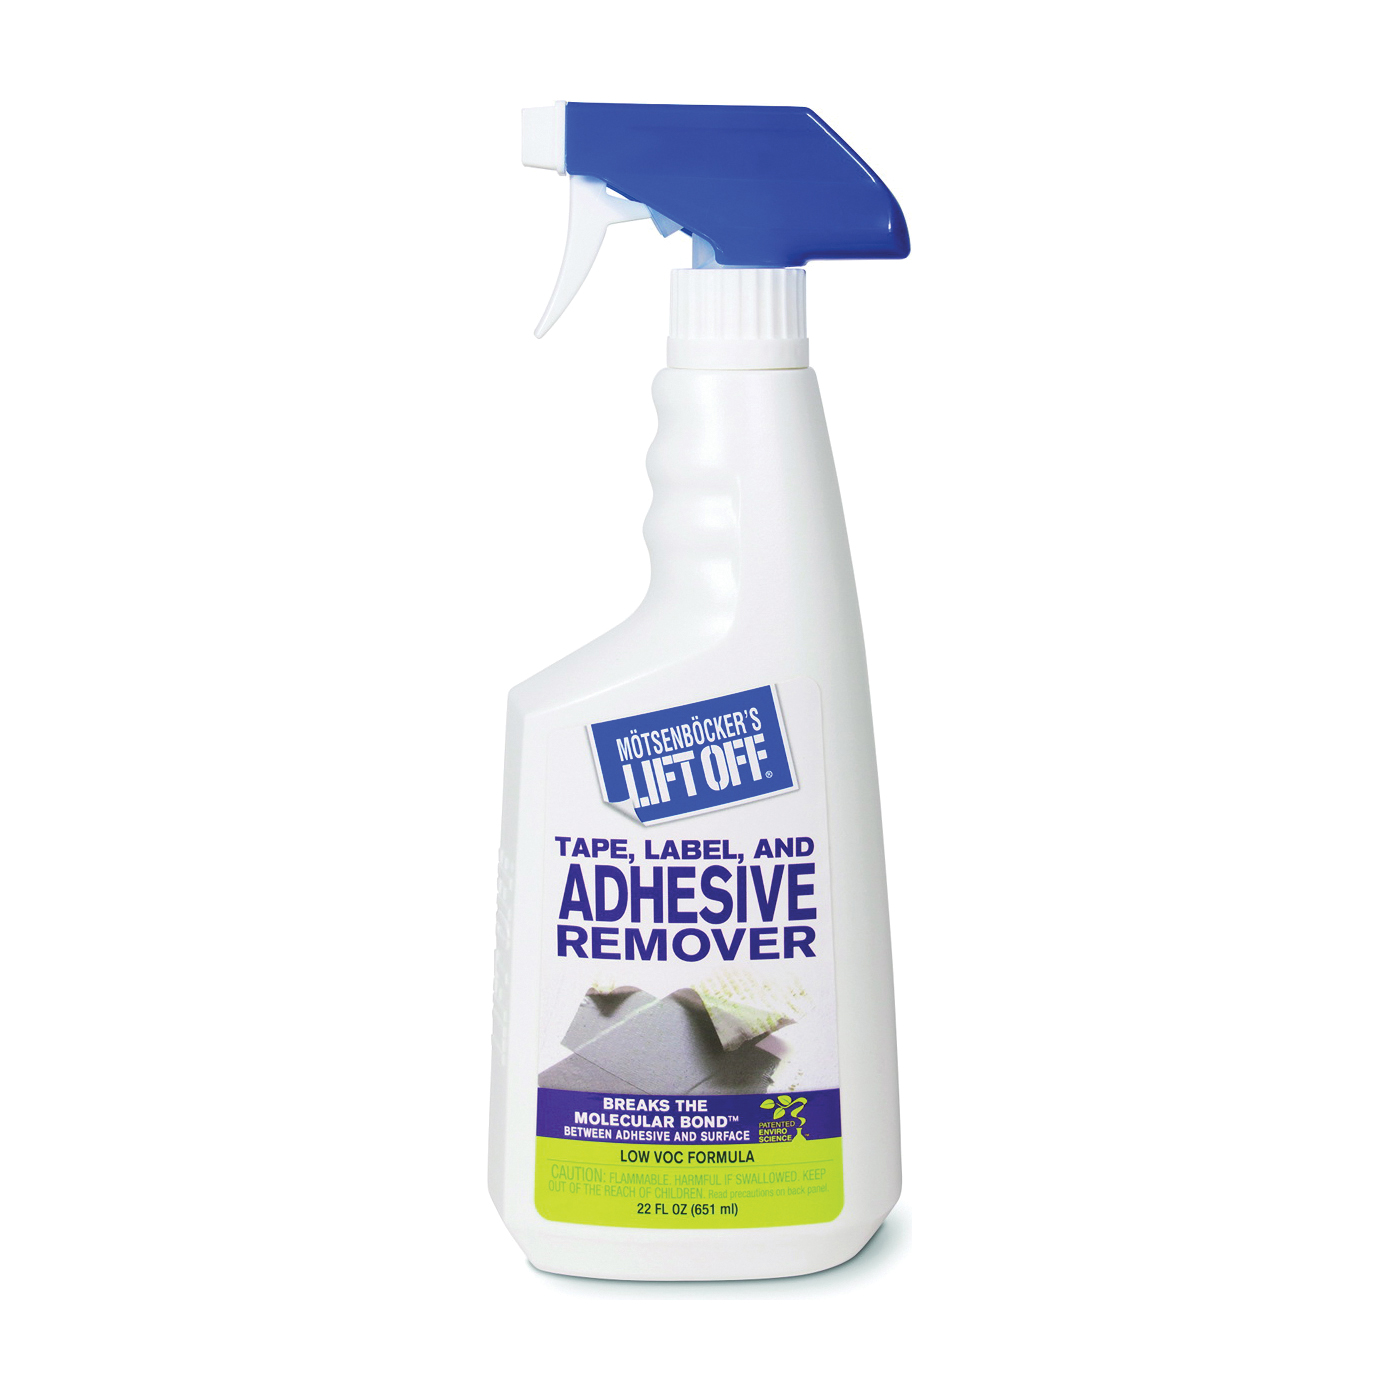 MOTSENBOCKER'S LIFT OFF 407-01 Adhesive Remover, Liquid, Pungent, Clear, 22 oz, Bottle - 1